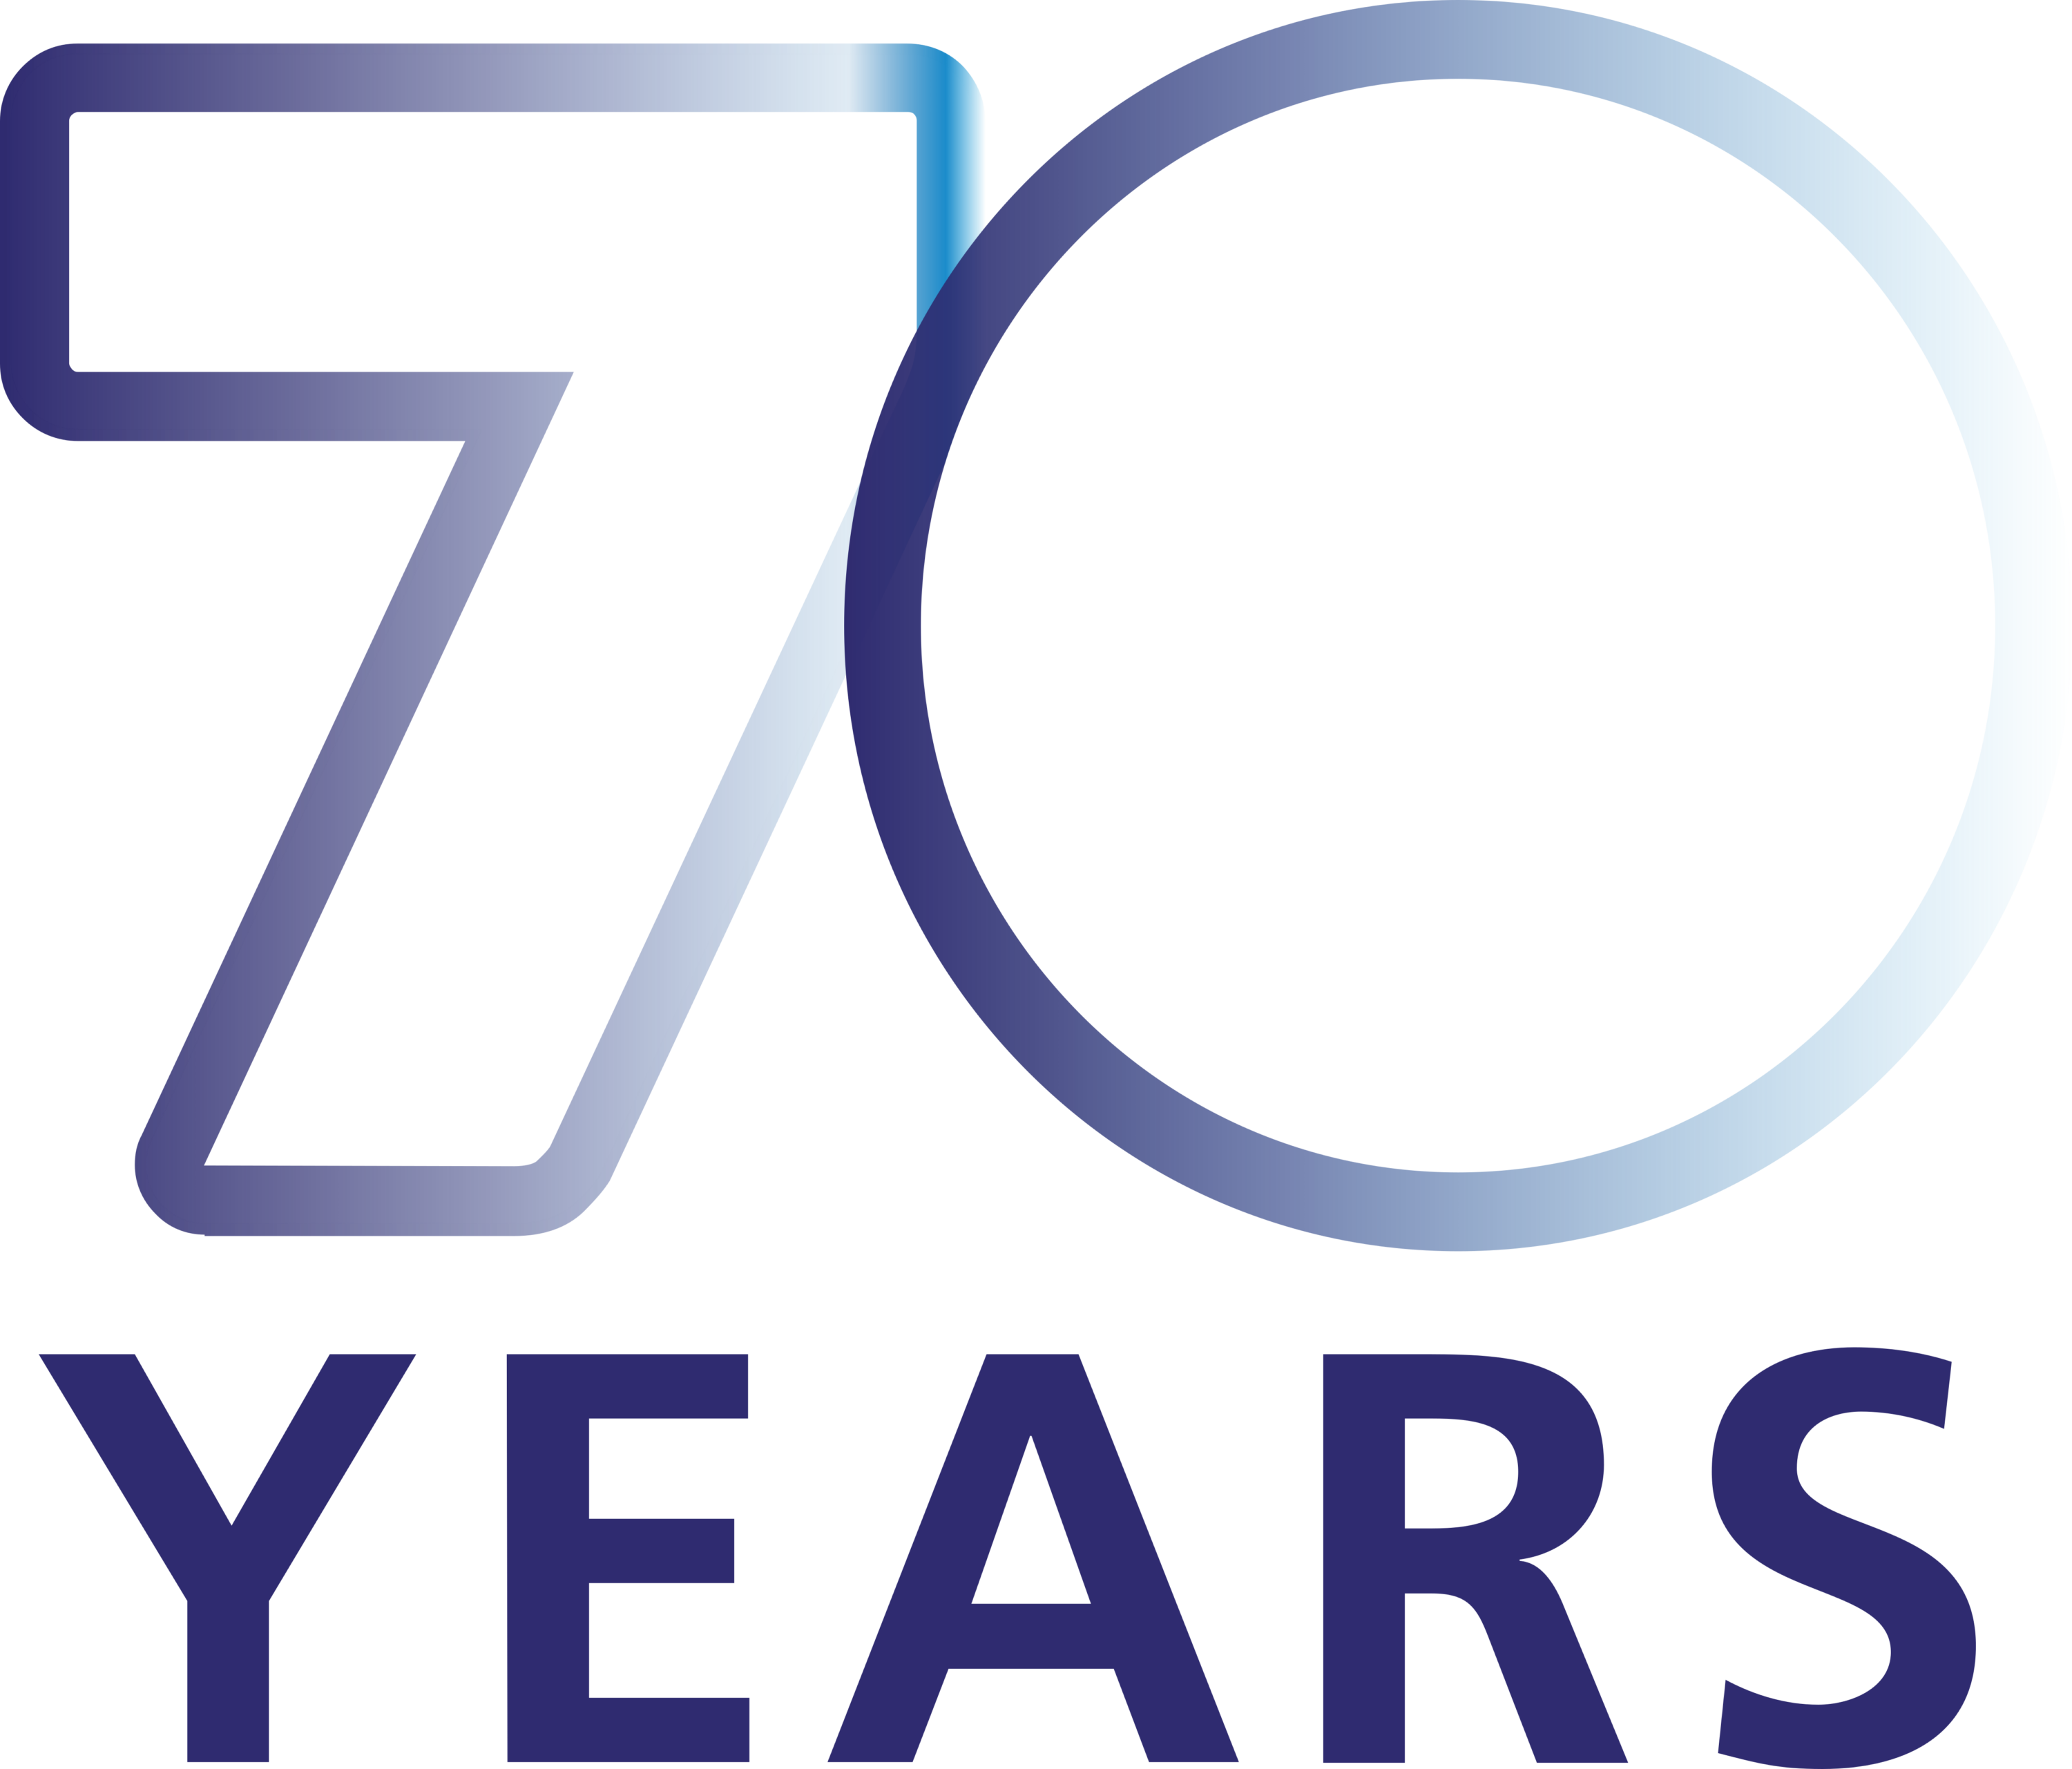 70 Years Logo